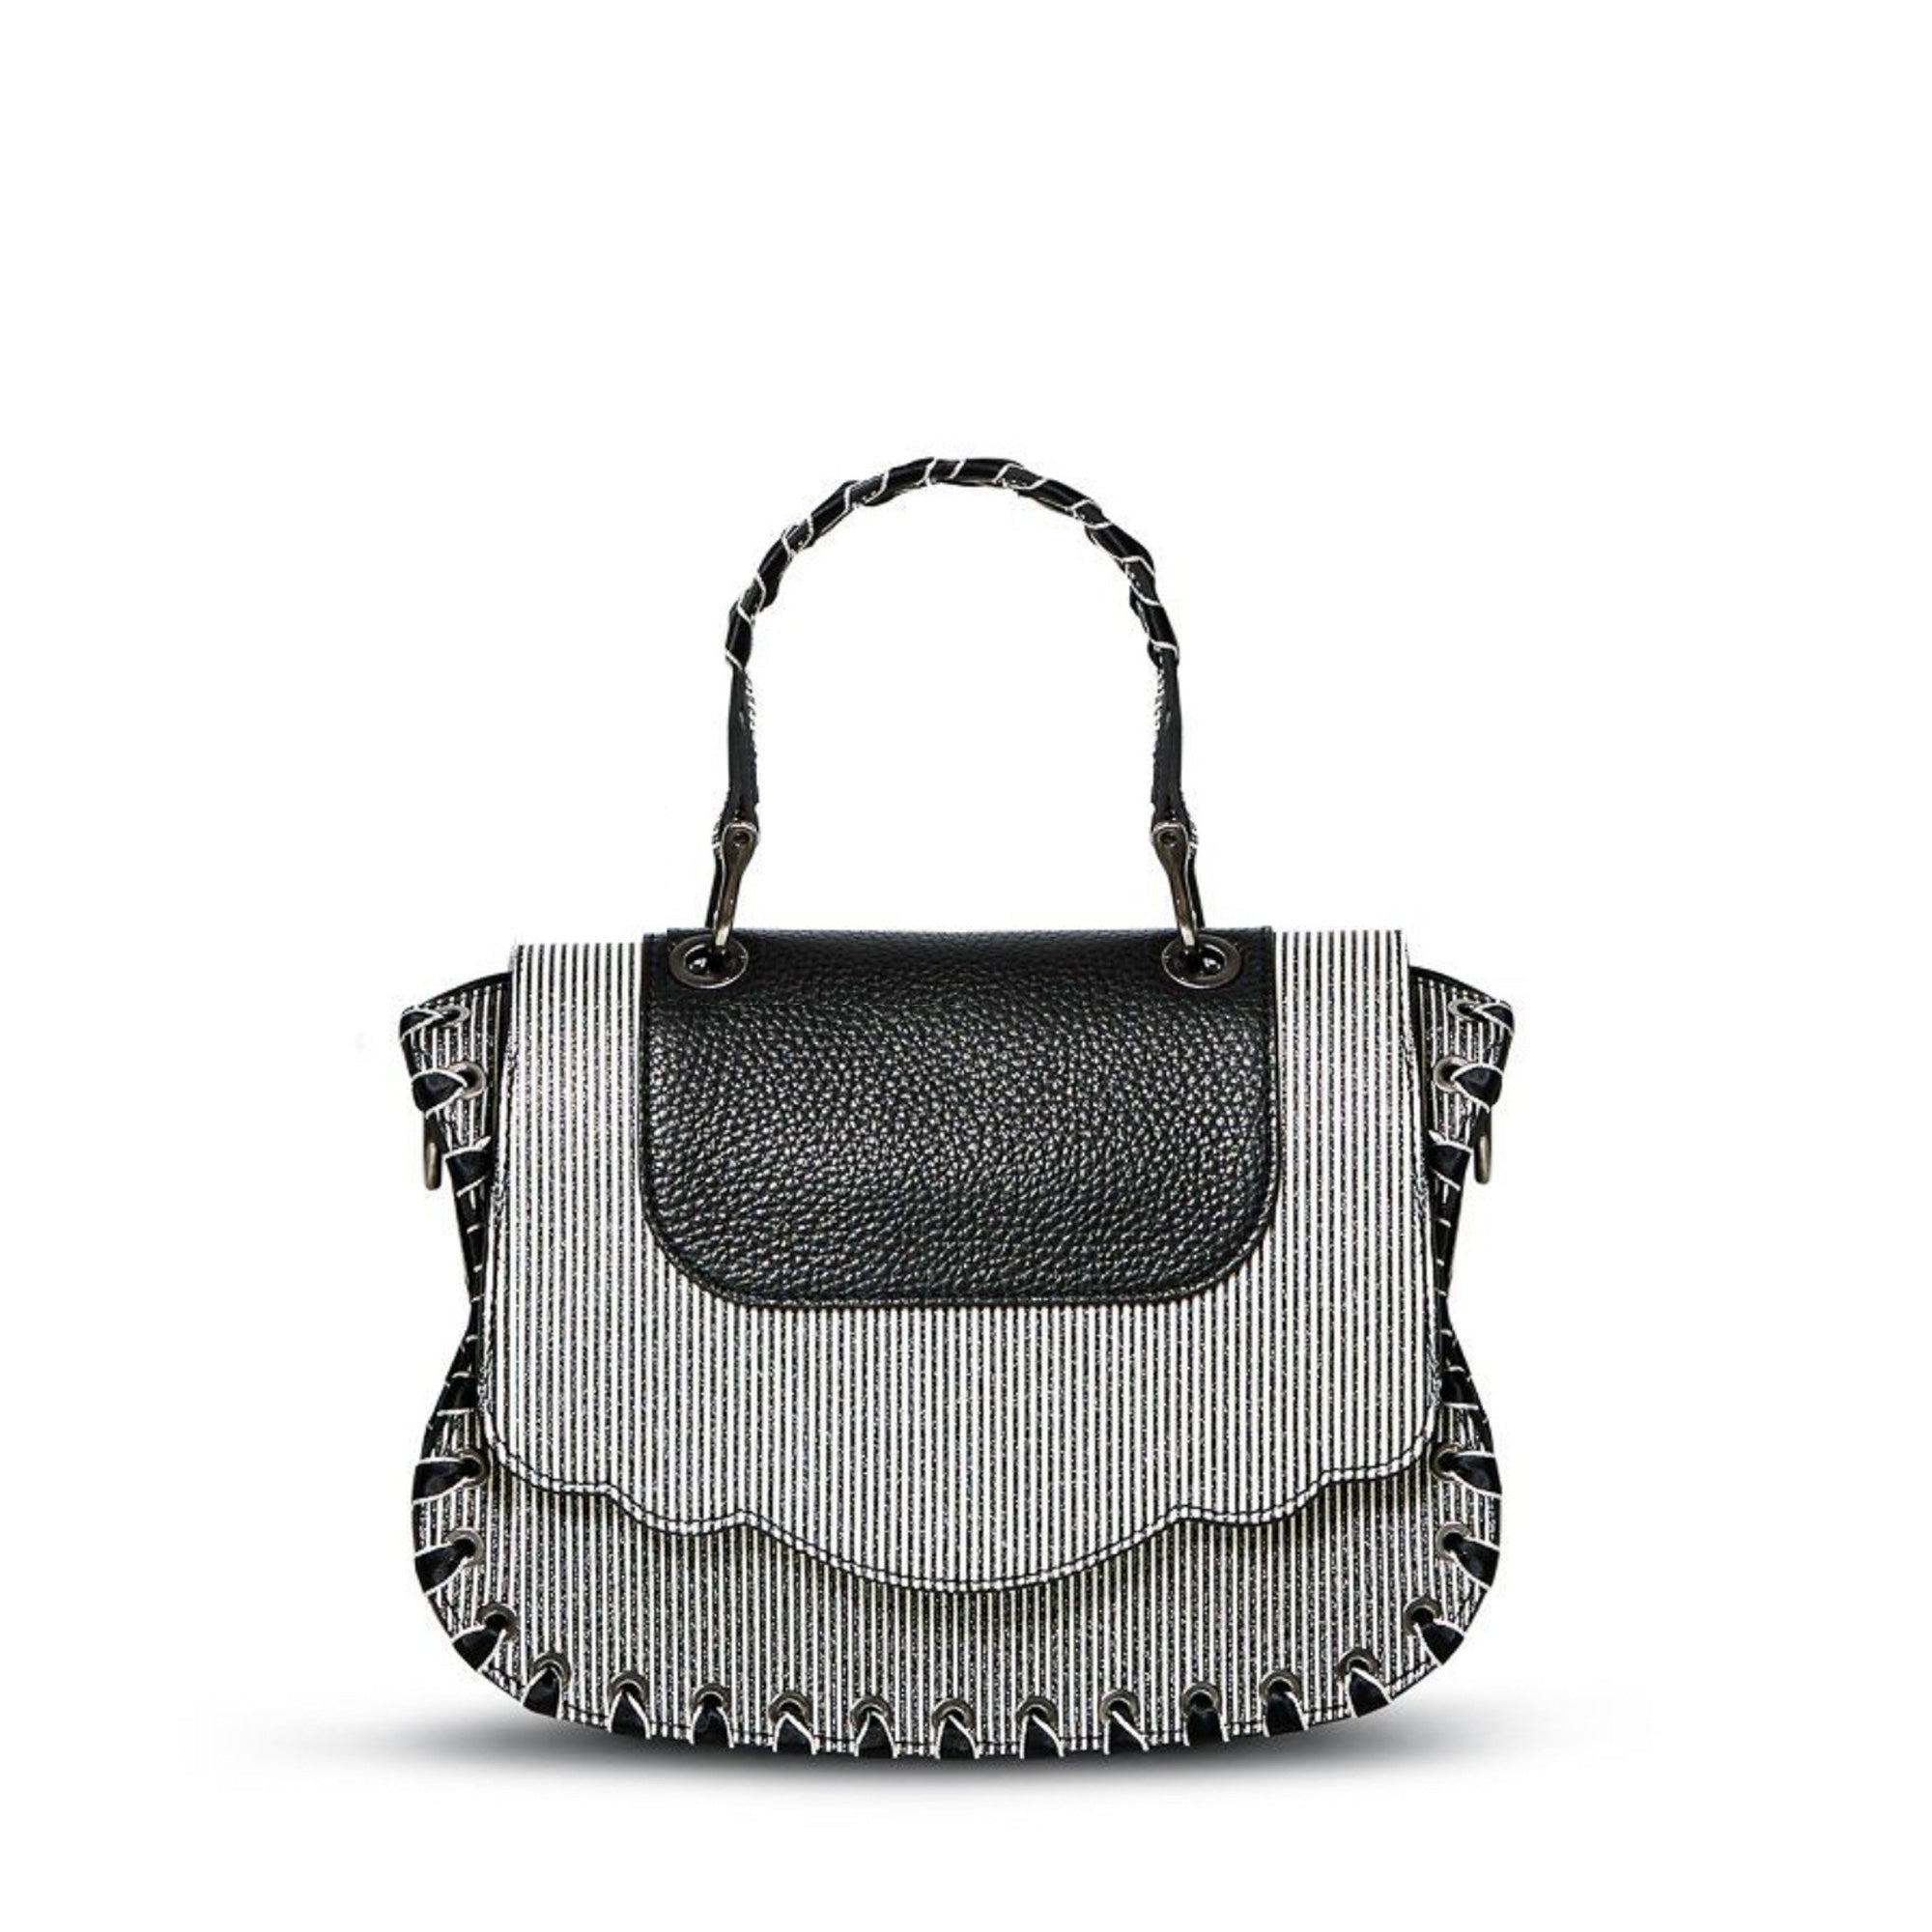 Sophisticated Black and White Handbag